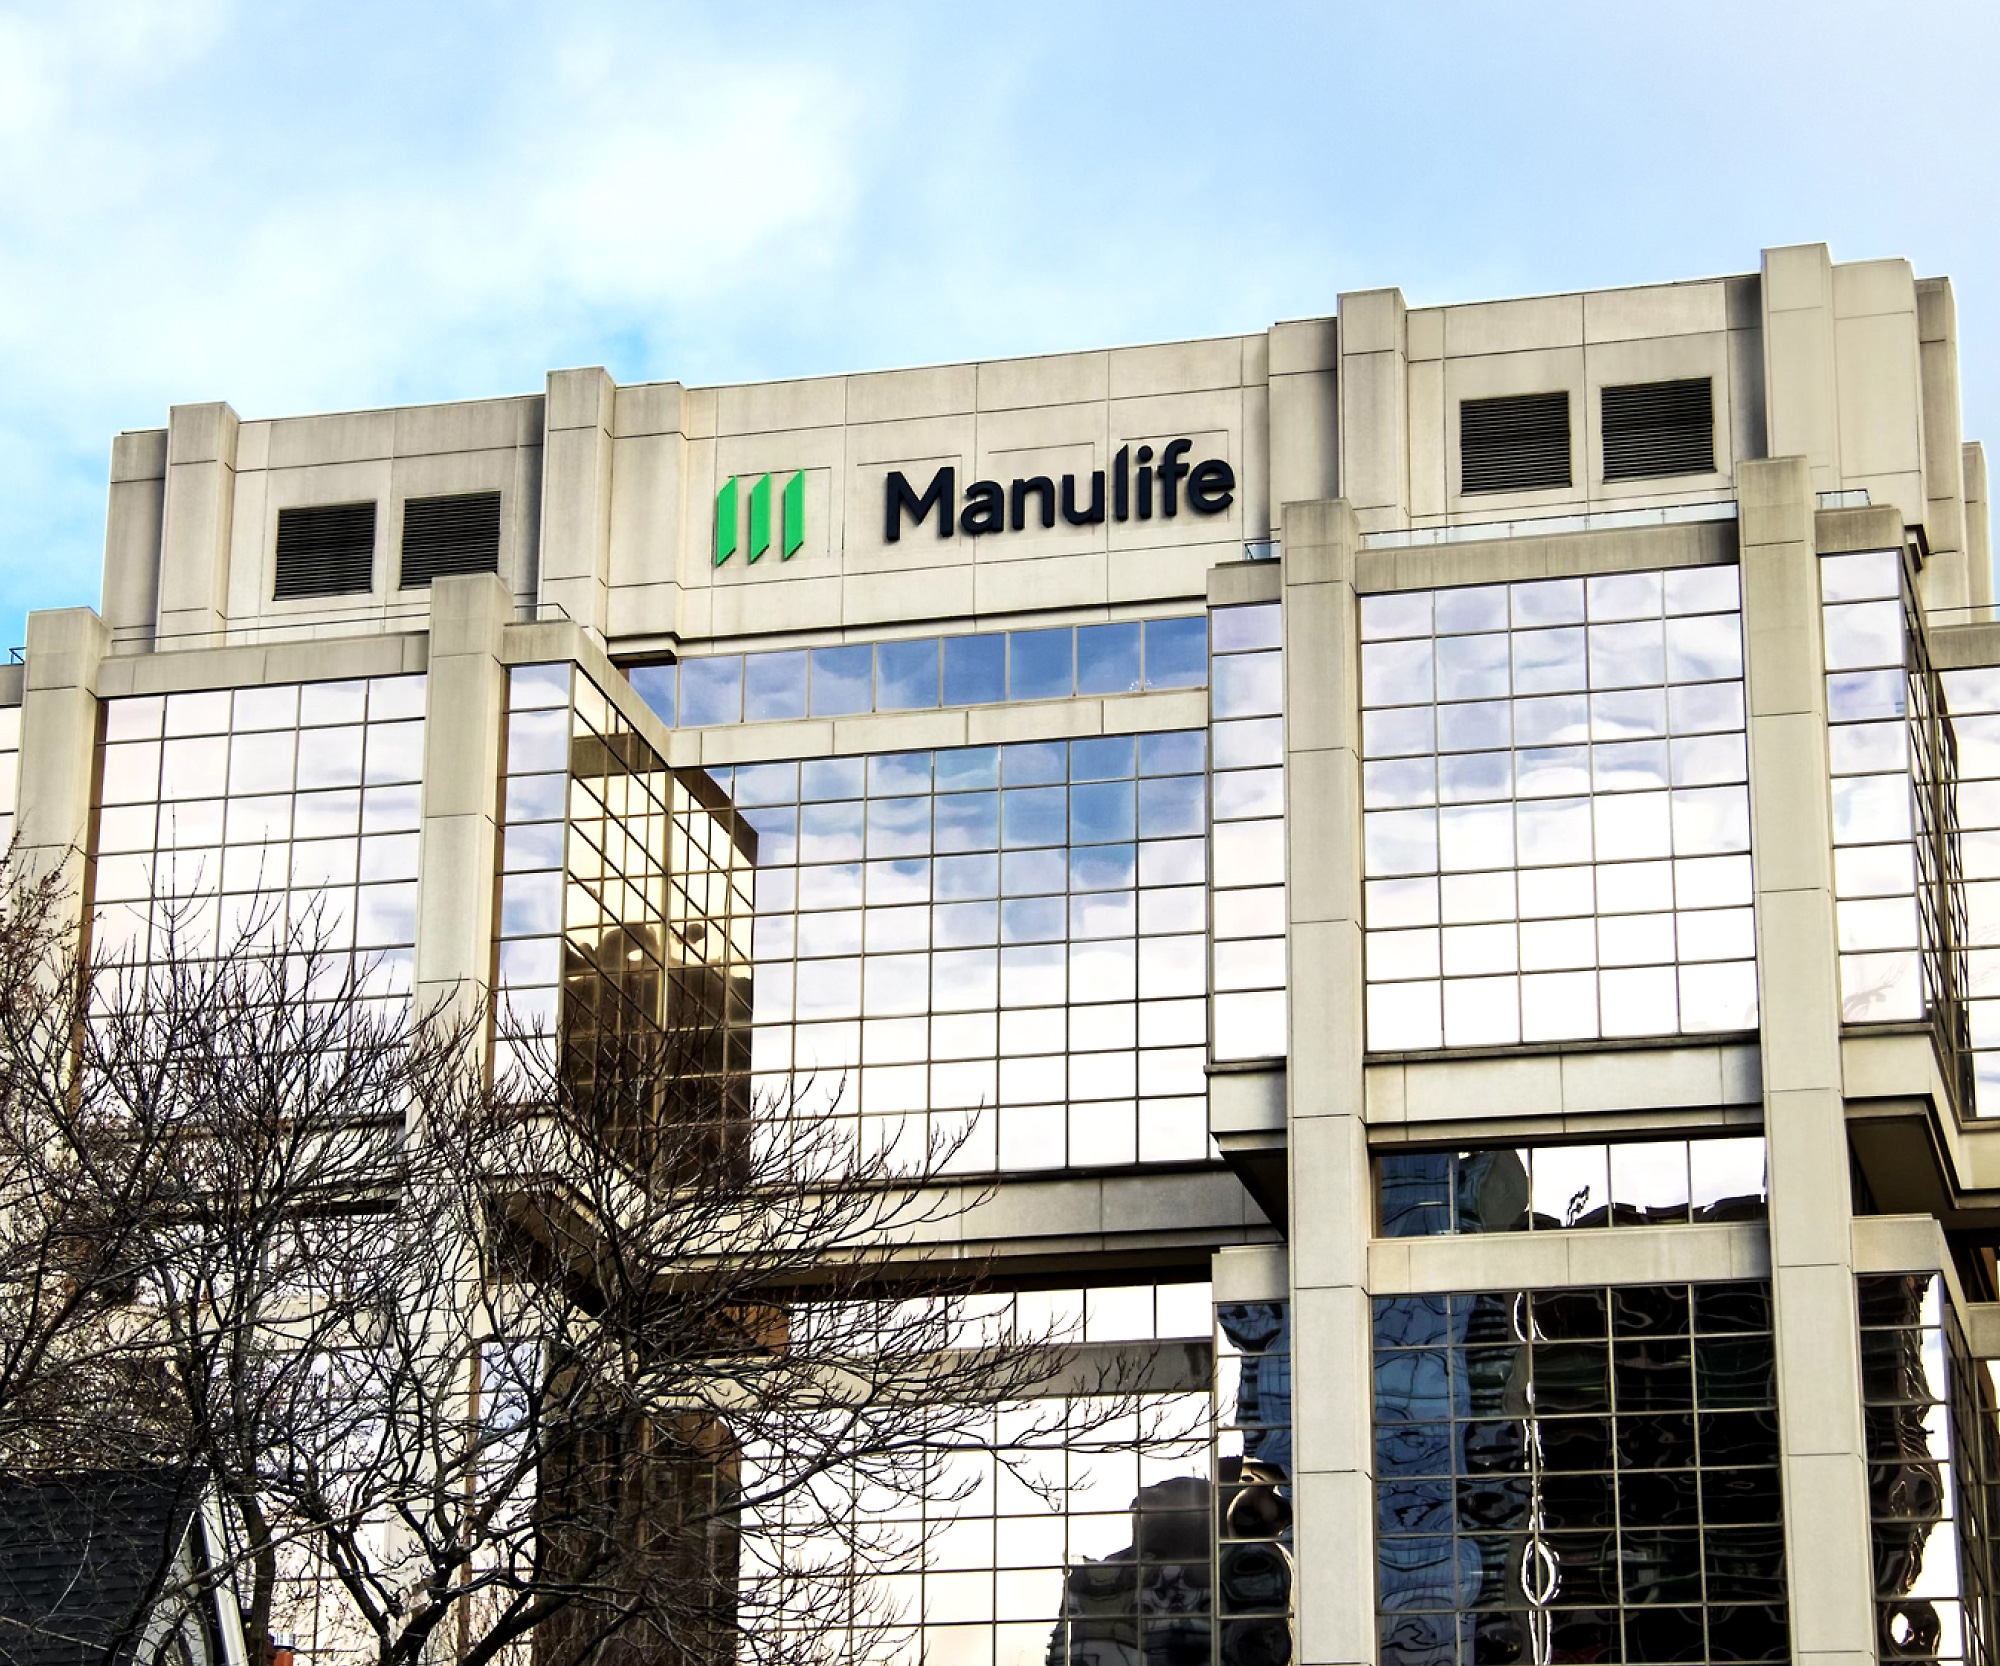 Un edificio con un logotipo de Manulife